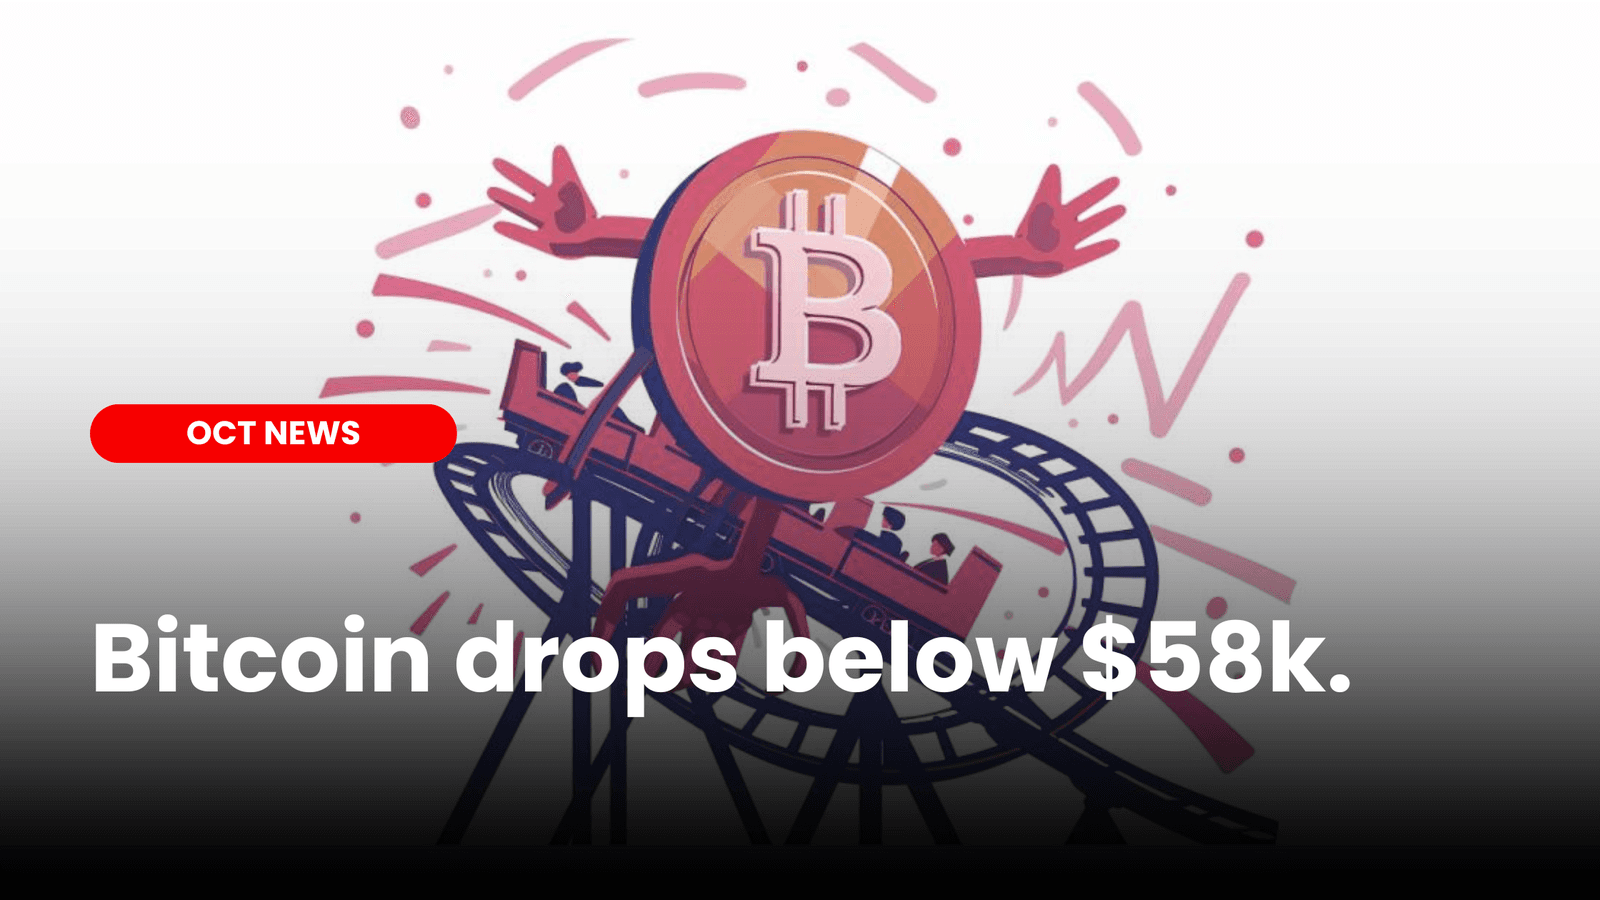 Bitcoin drops below $58k image